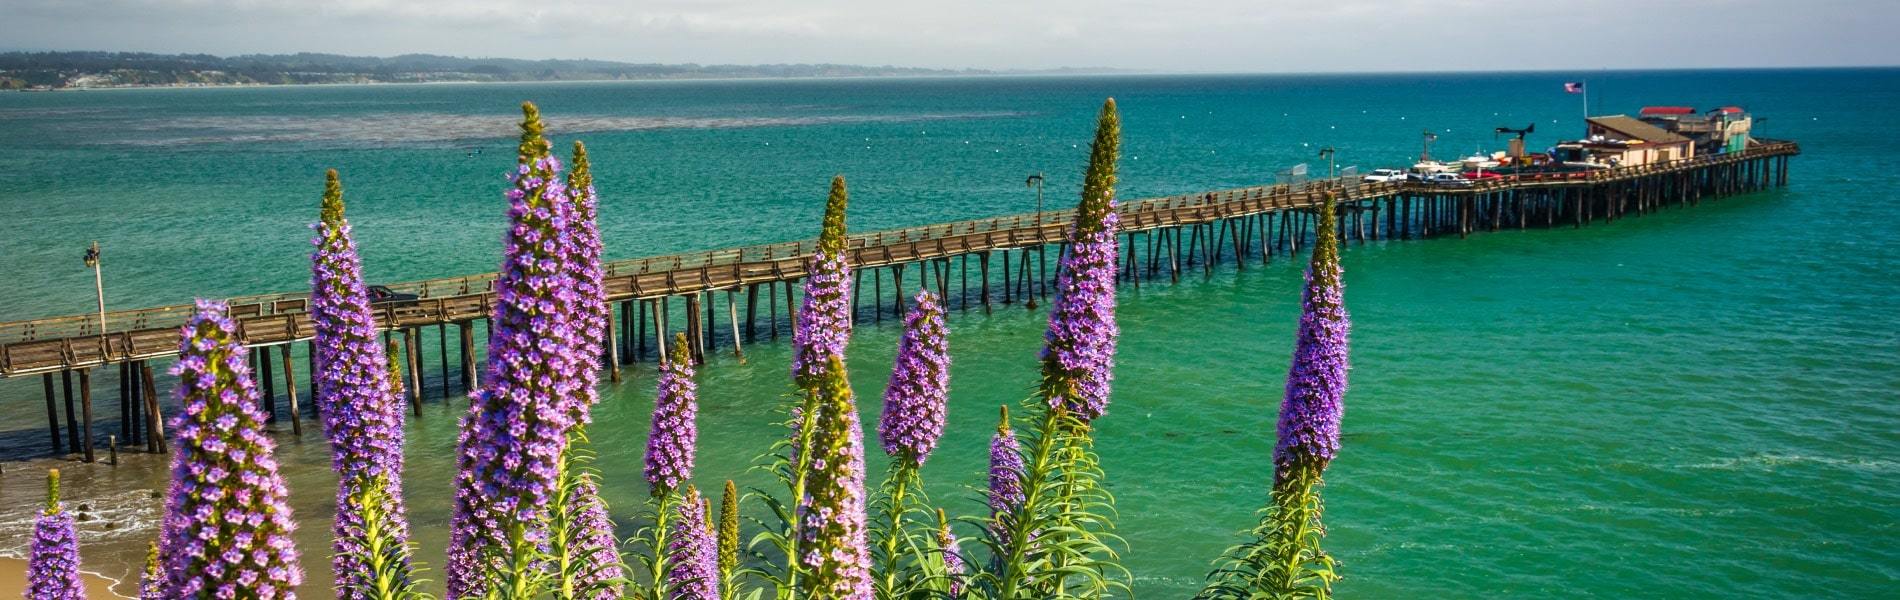 View of ocean, flowers, and pier near Jewel Box in Santa Cruz